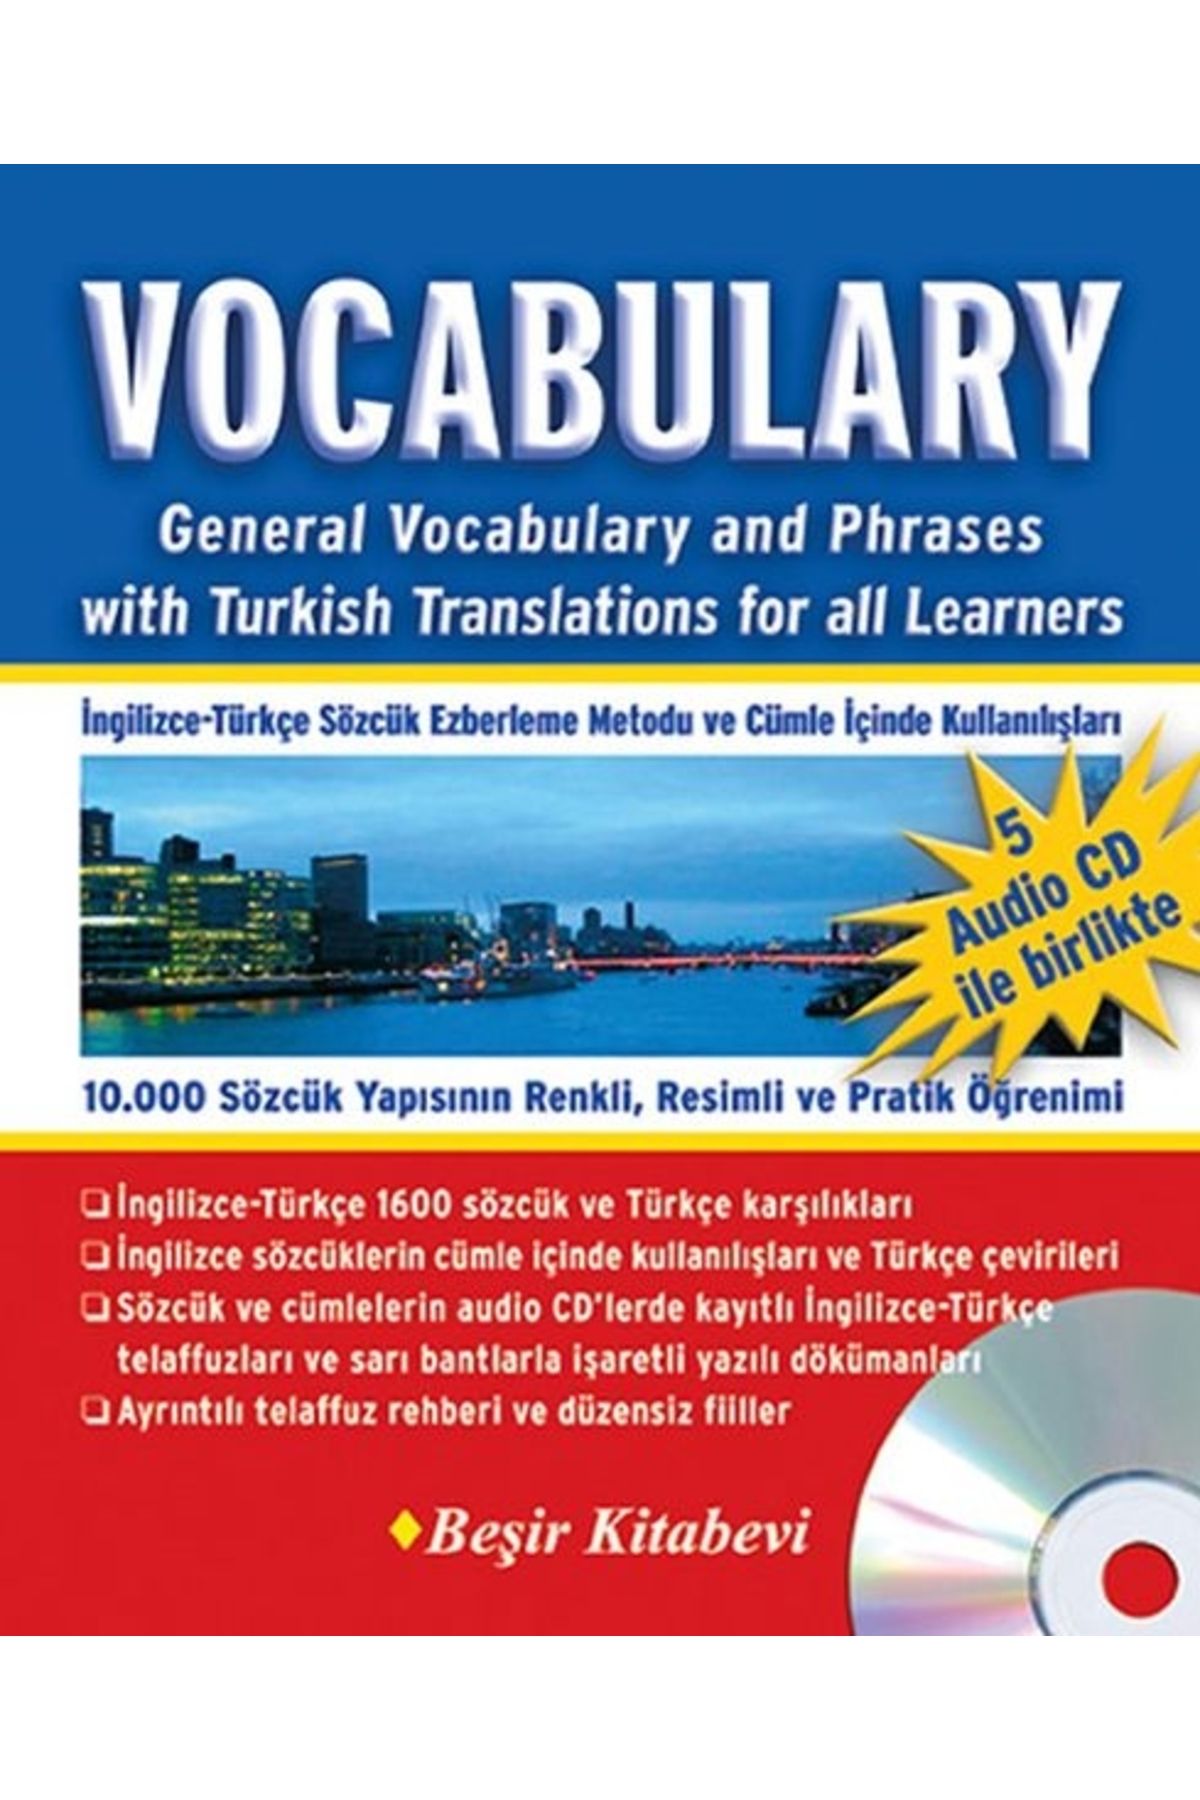 Beşir Kitabevi Vocabulary (5 Audio CD ile Birlikte)